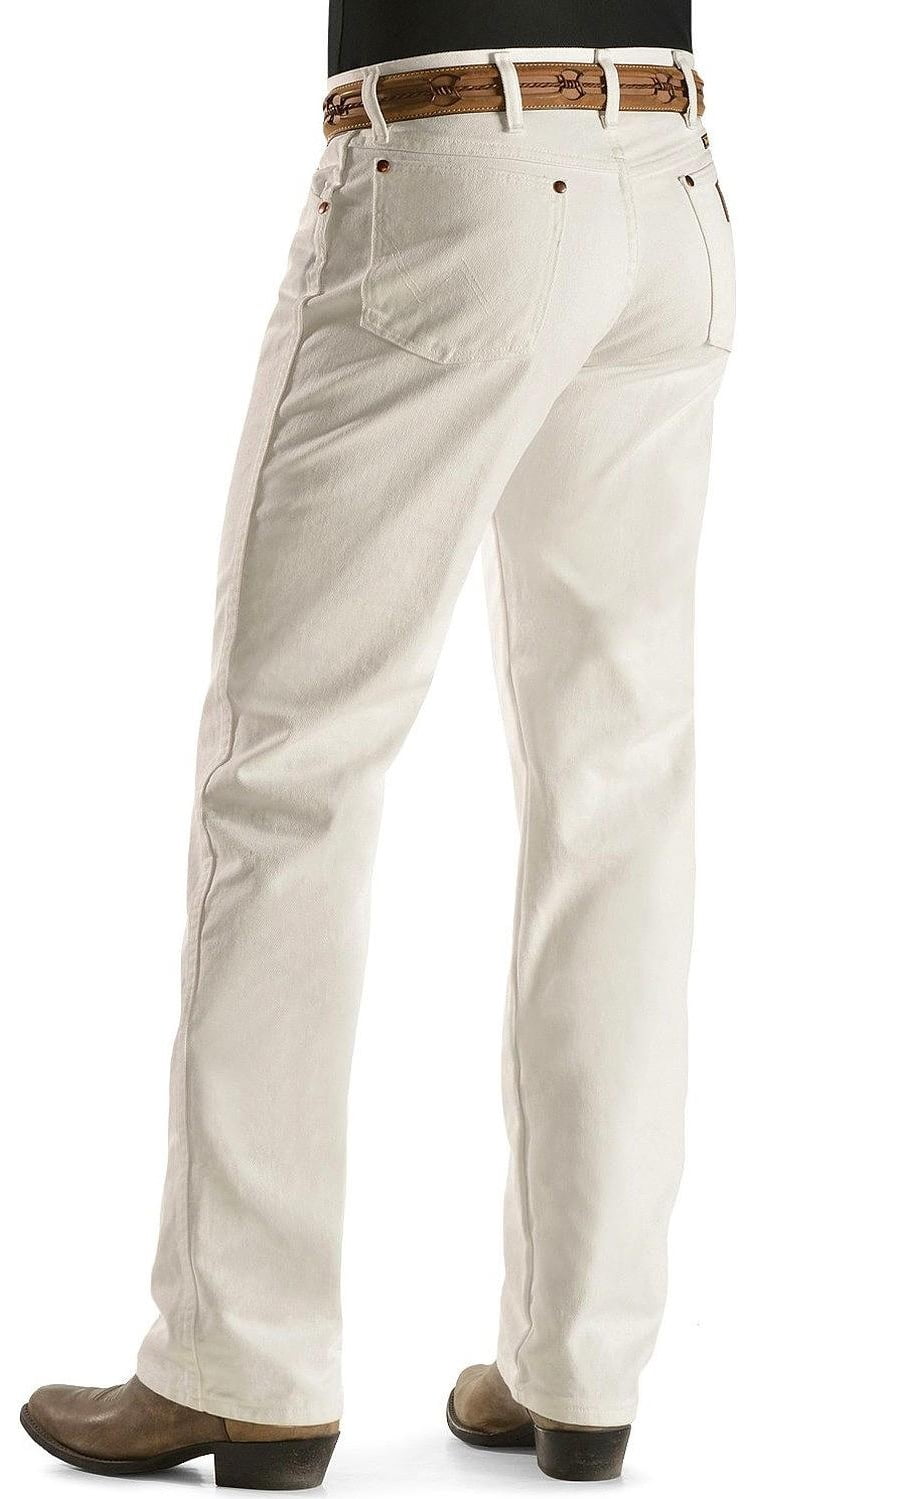 wrangler men's cowboy cut original fit jean, white, 33x32 